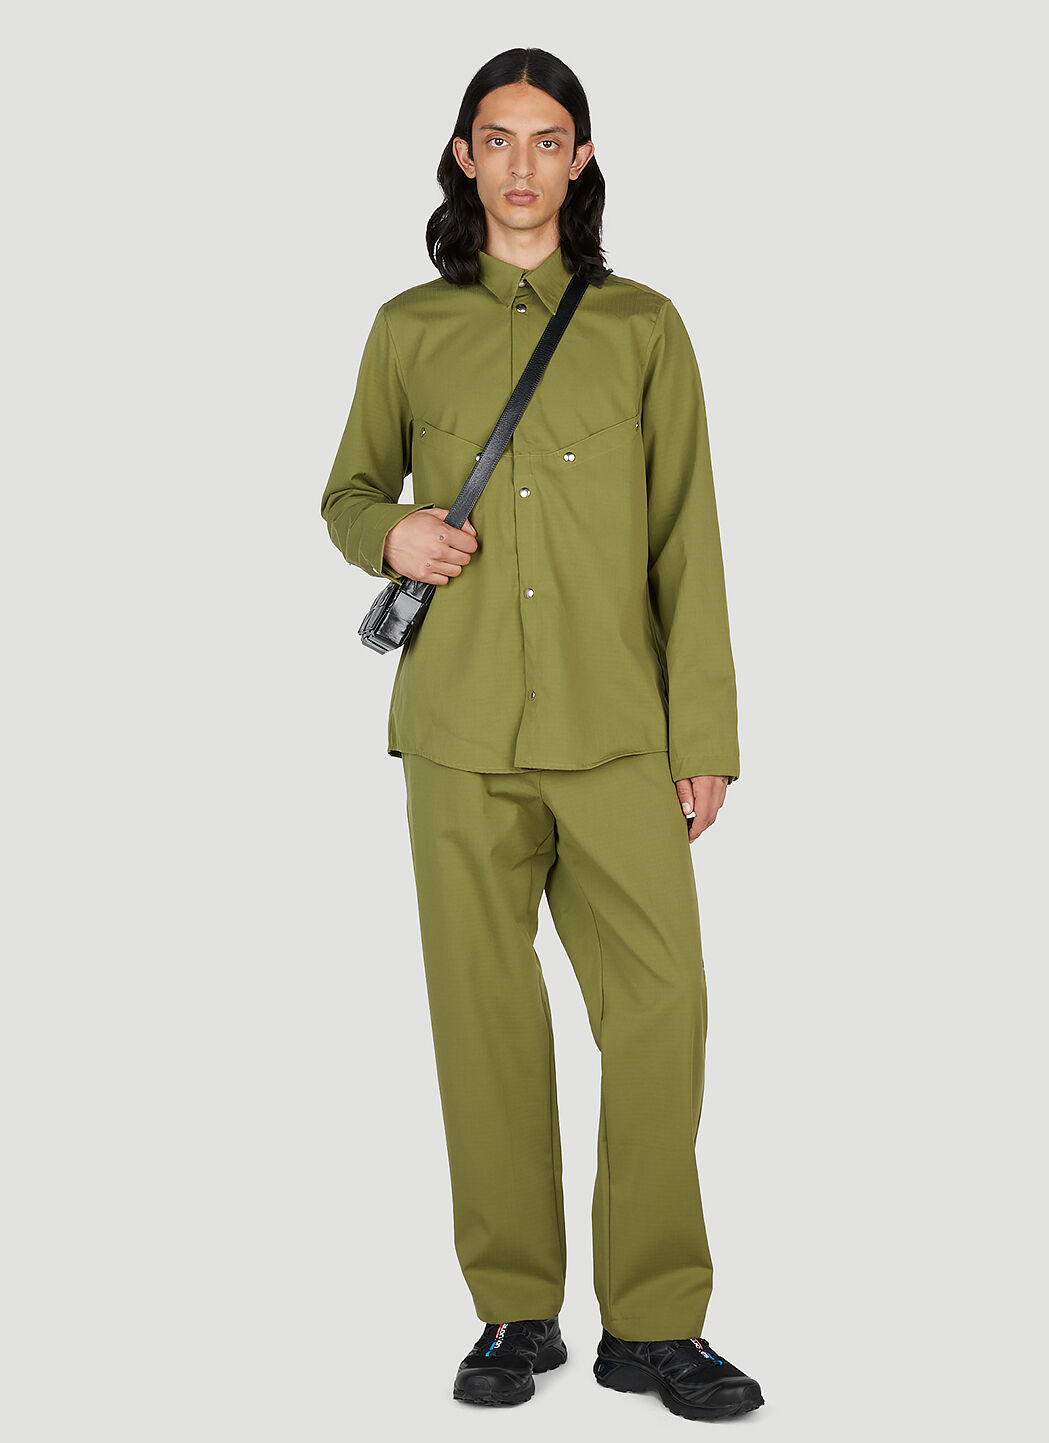 Ranra Jor Shirt in Green | LN-CC®